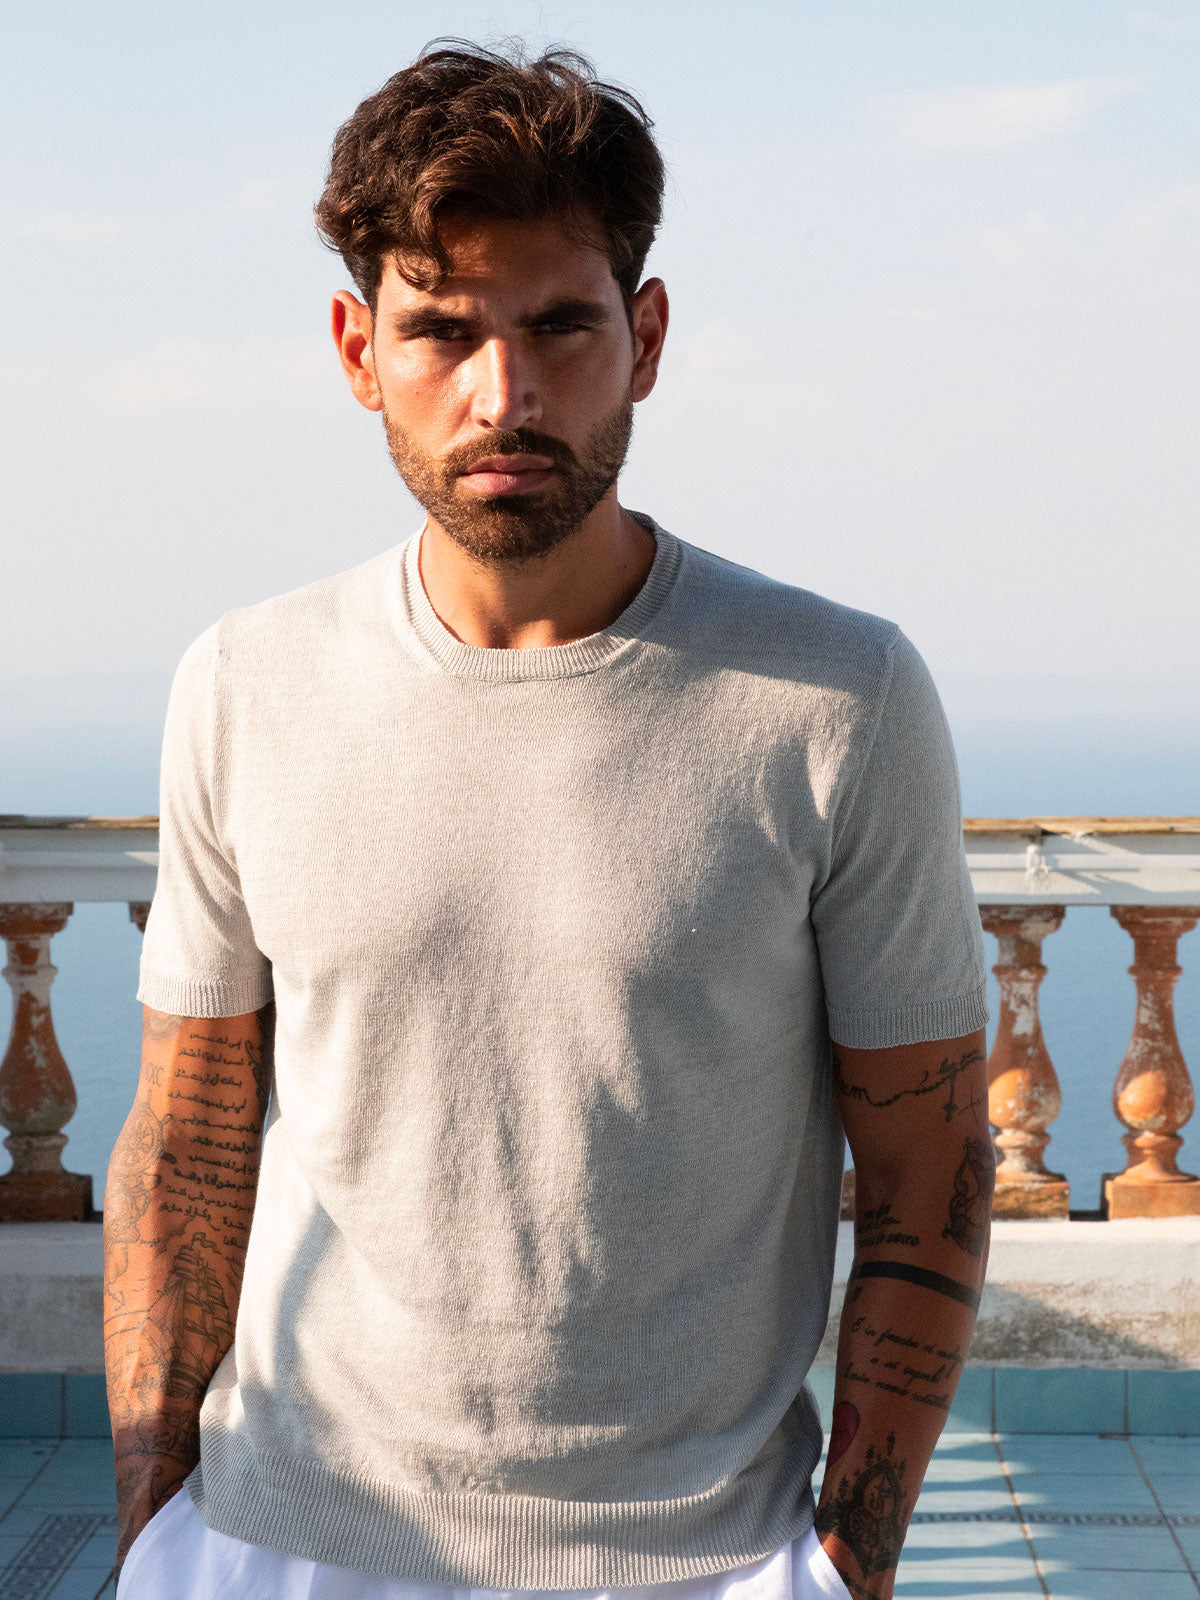 T-Shirt M/C 100% Capri light grey linen t-shirt worn by model